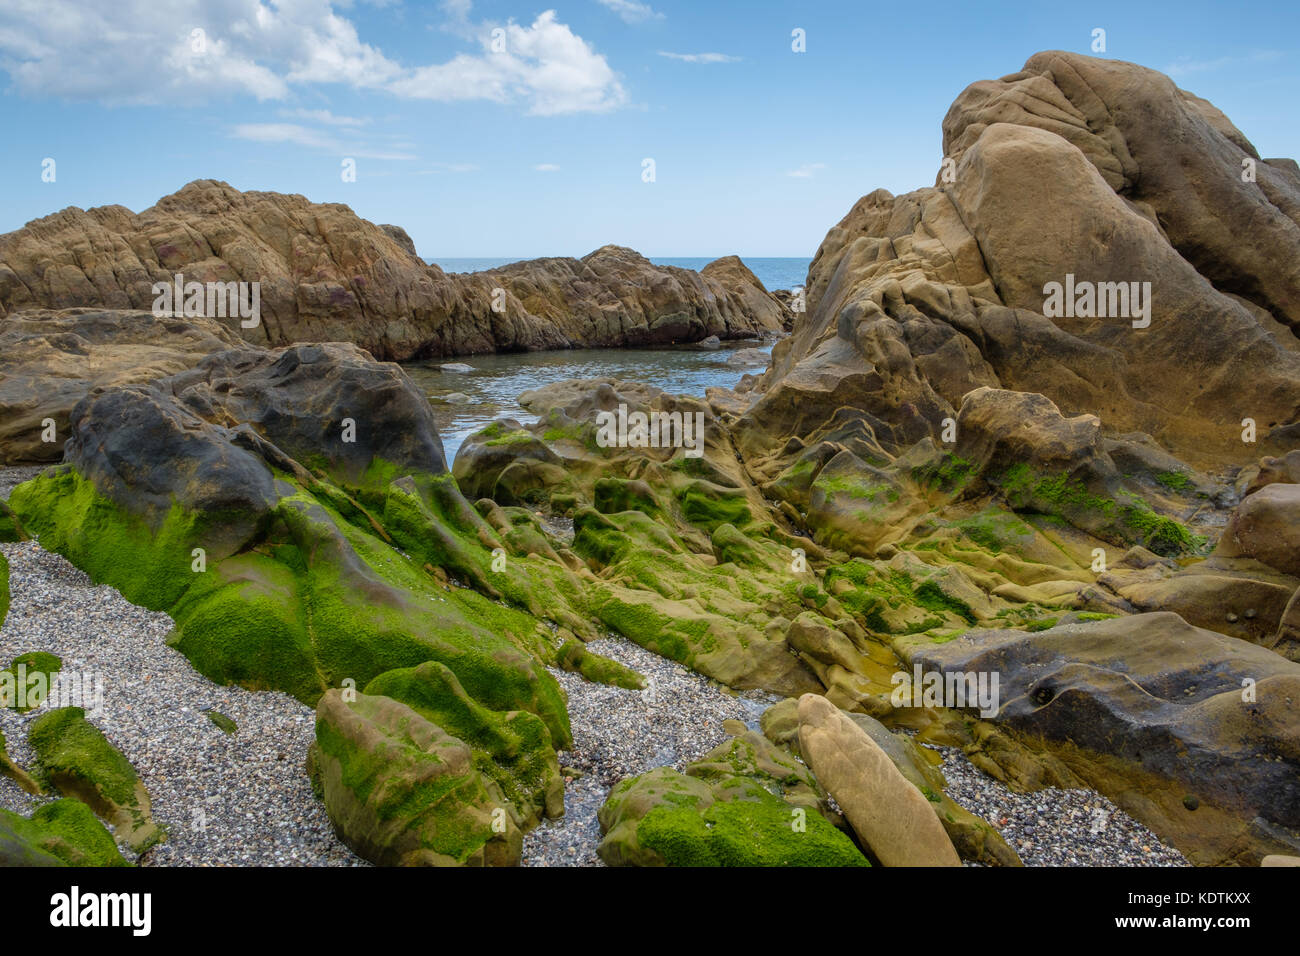 Rock pool covered in green seaweed. Stock Photo